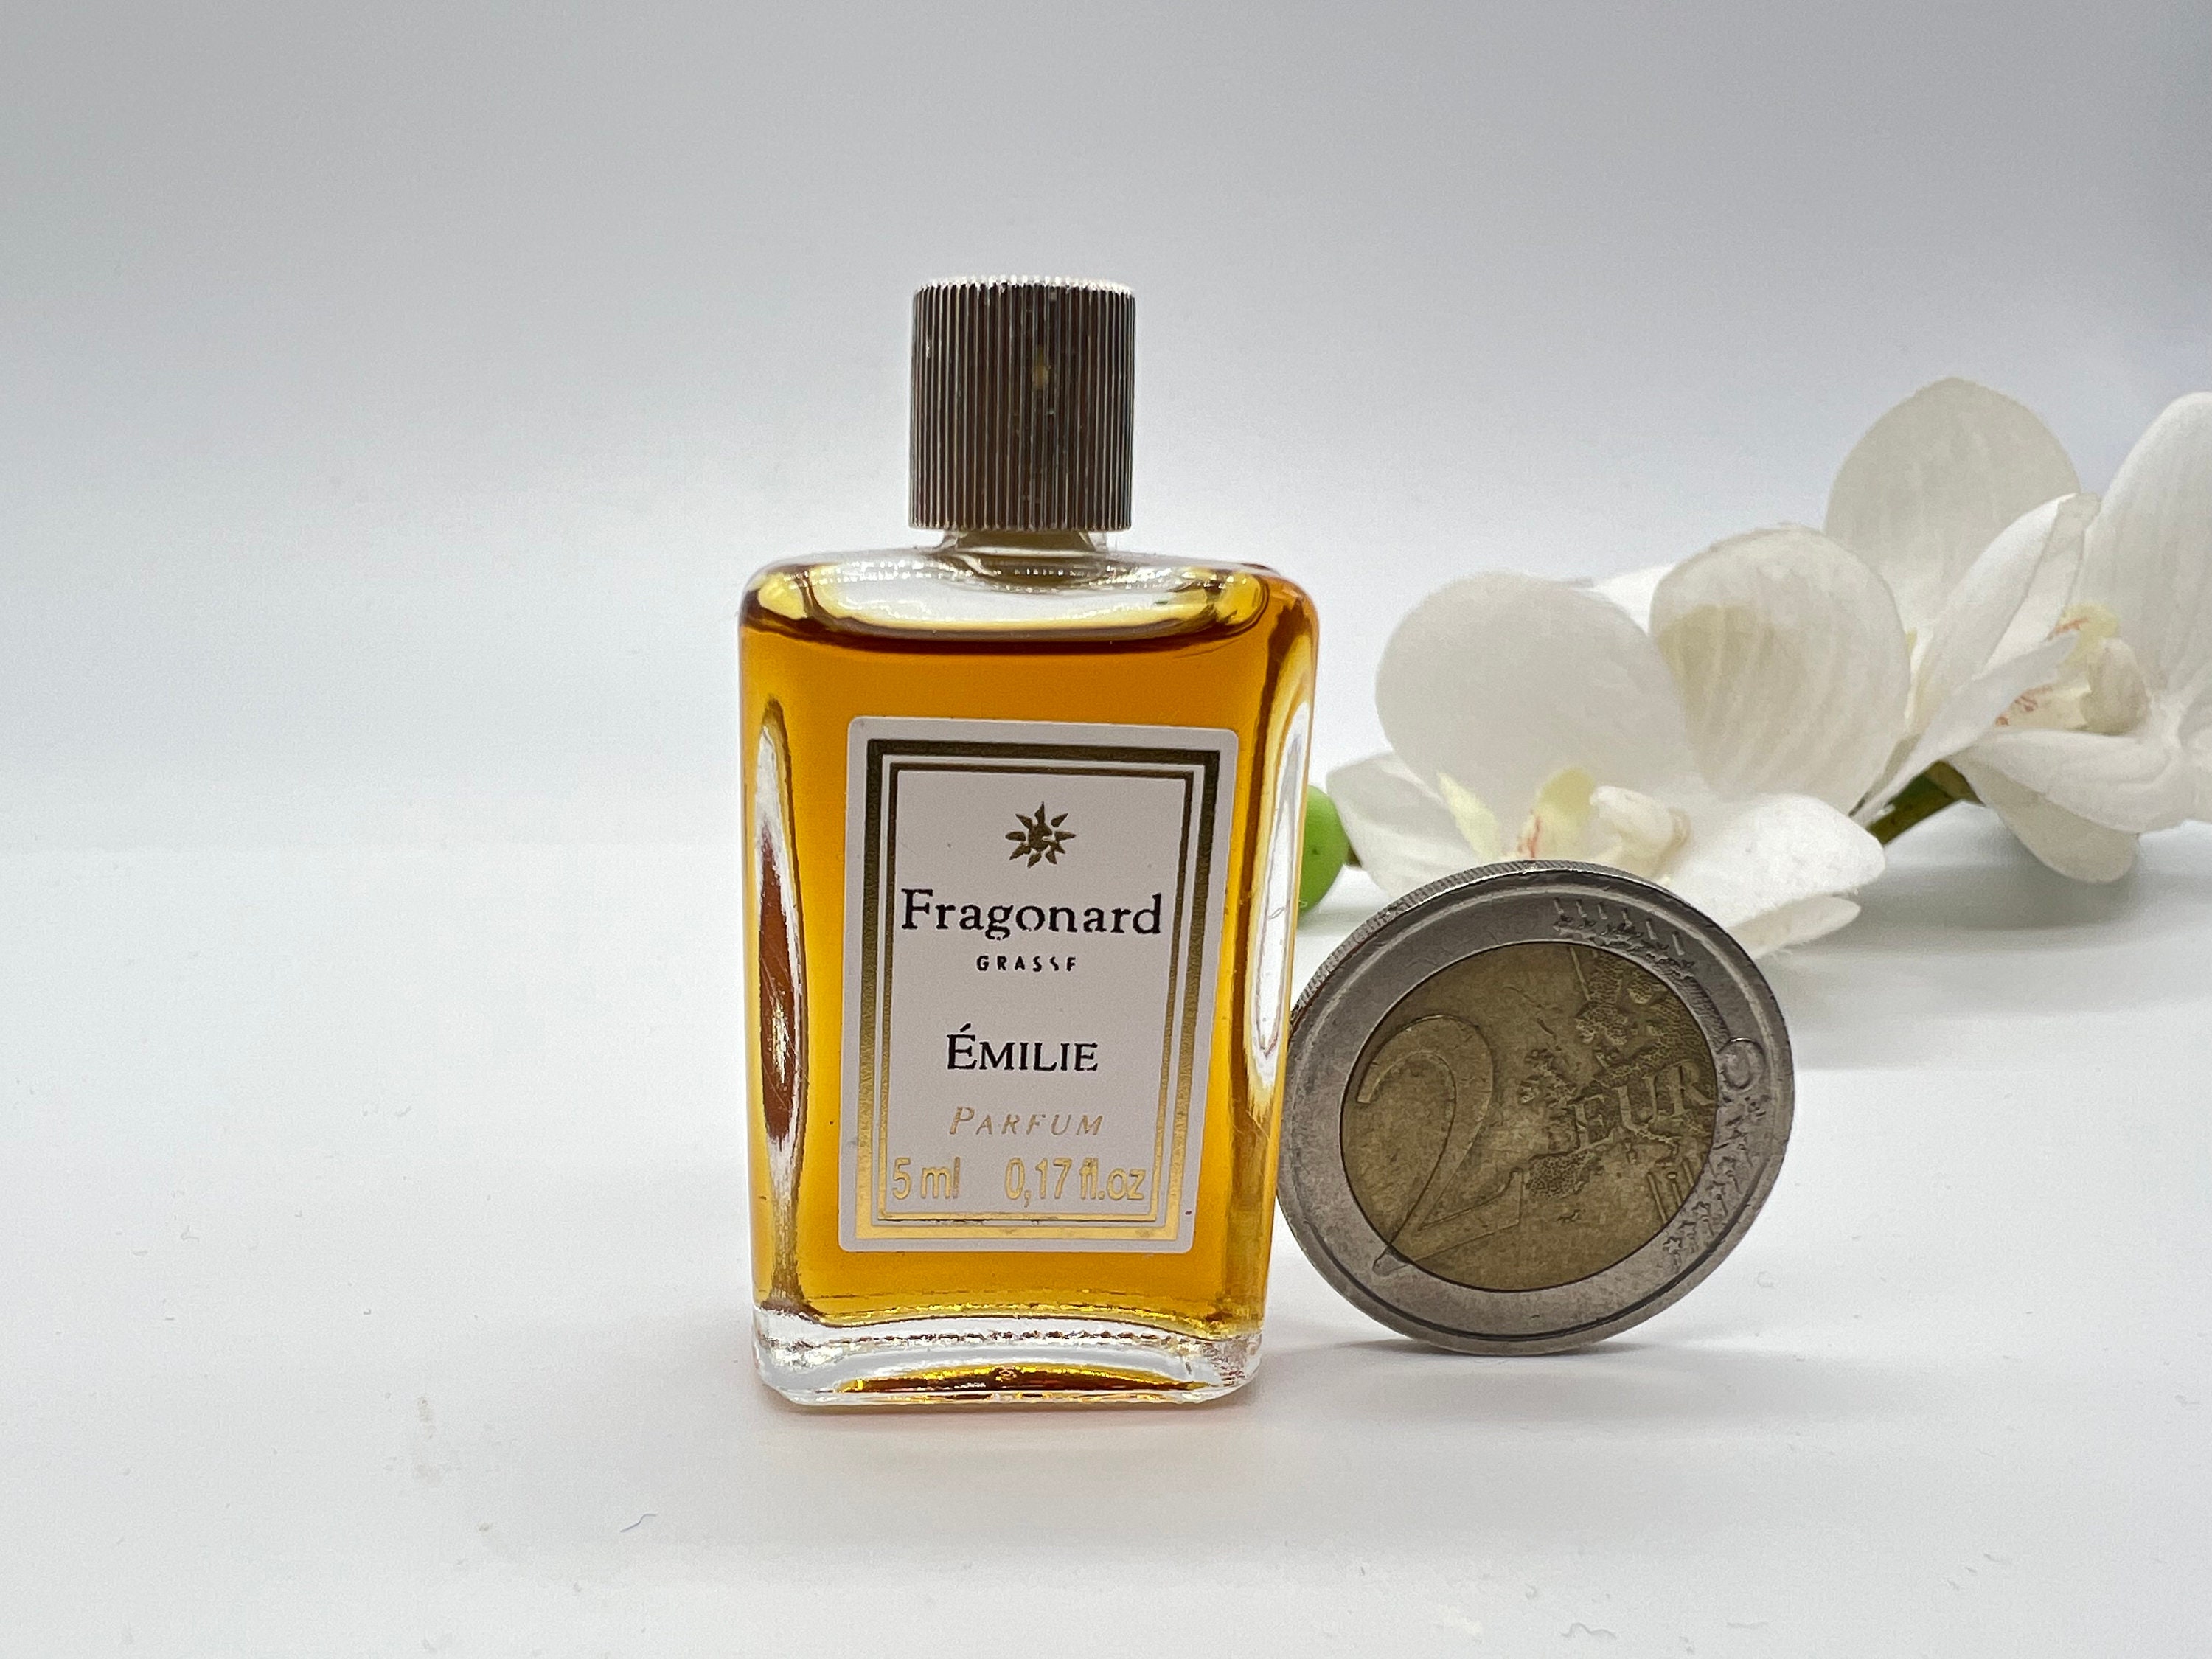 Parfumeries Fragonard Miniature Perfume Fragrances for Women